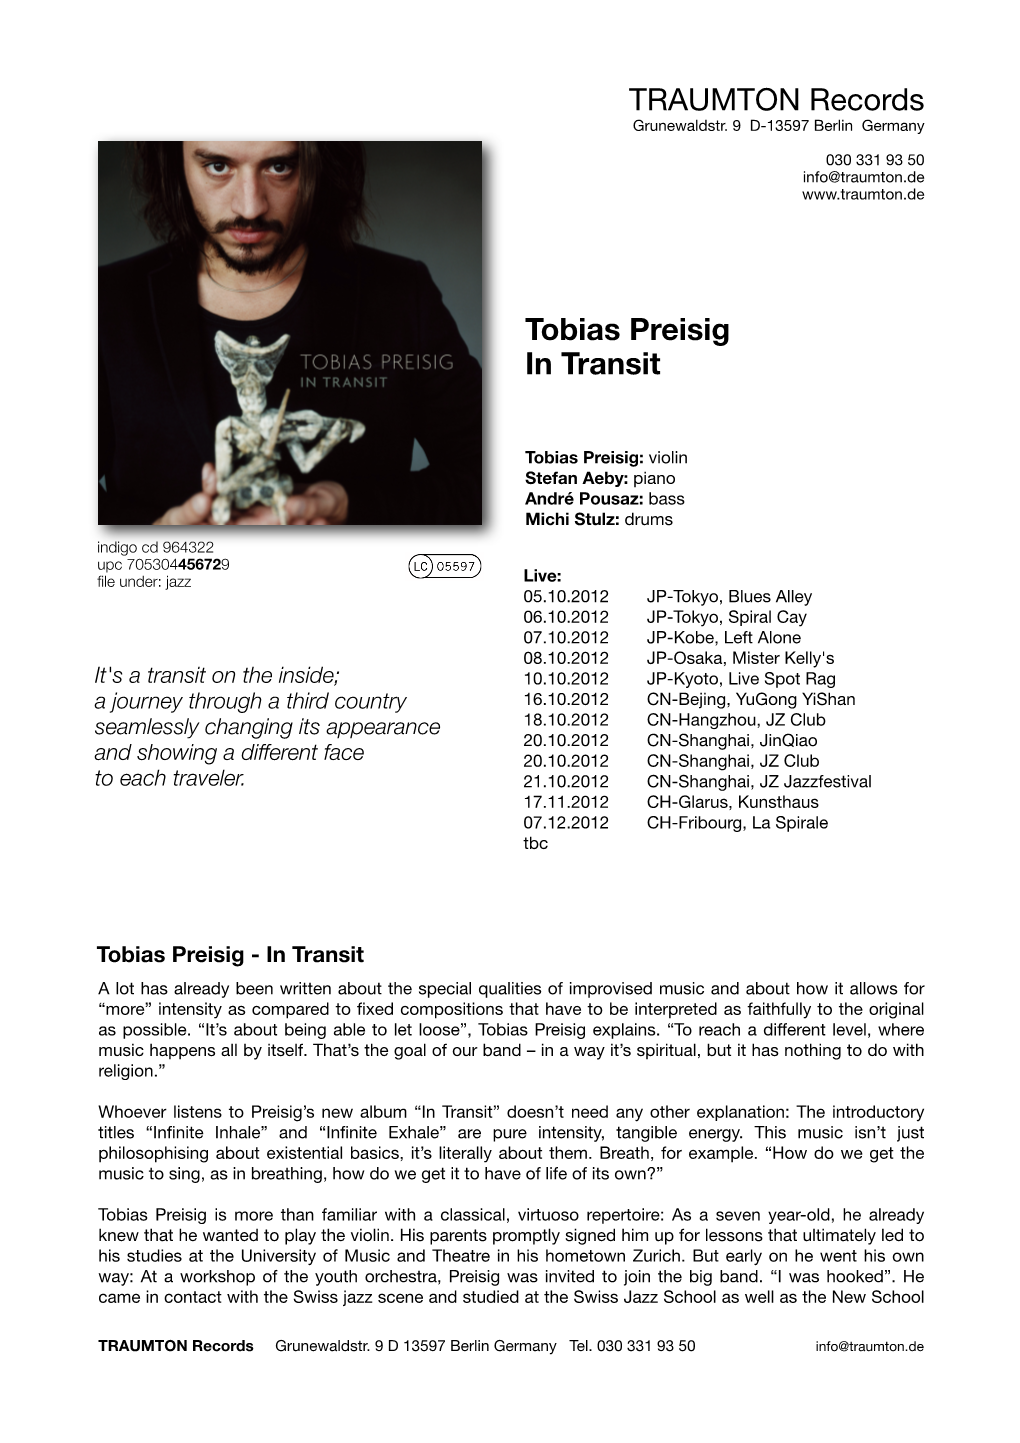 Tobias Preisig in Transit TRAUMTON Records